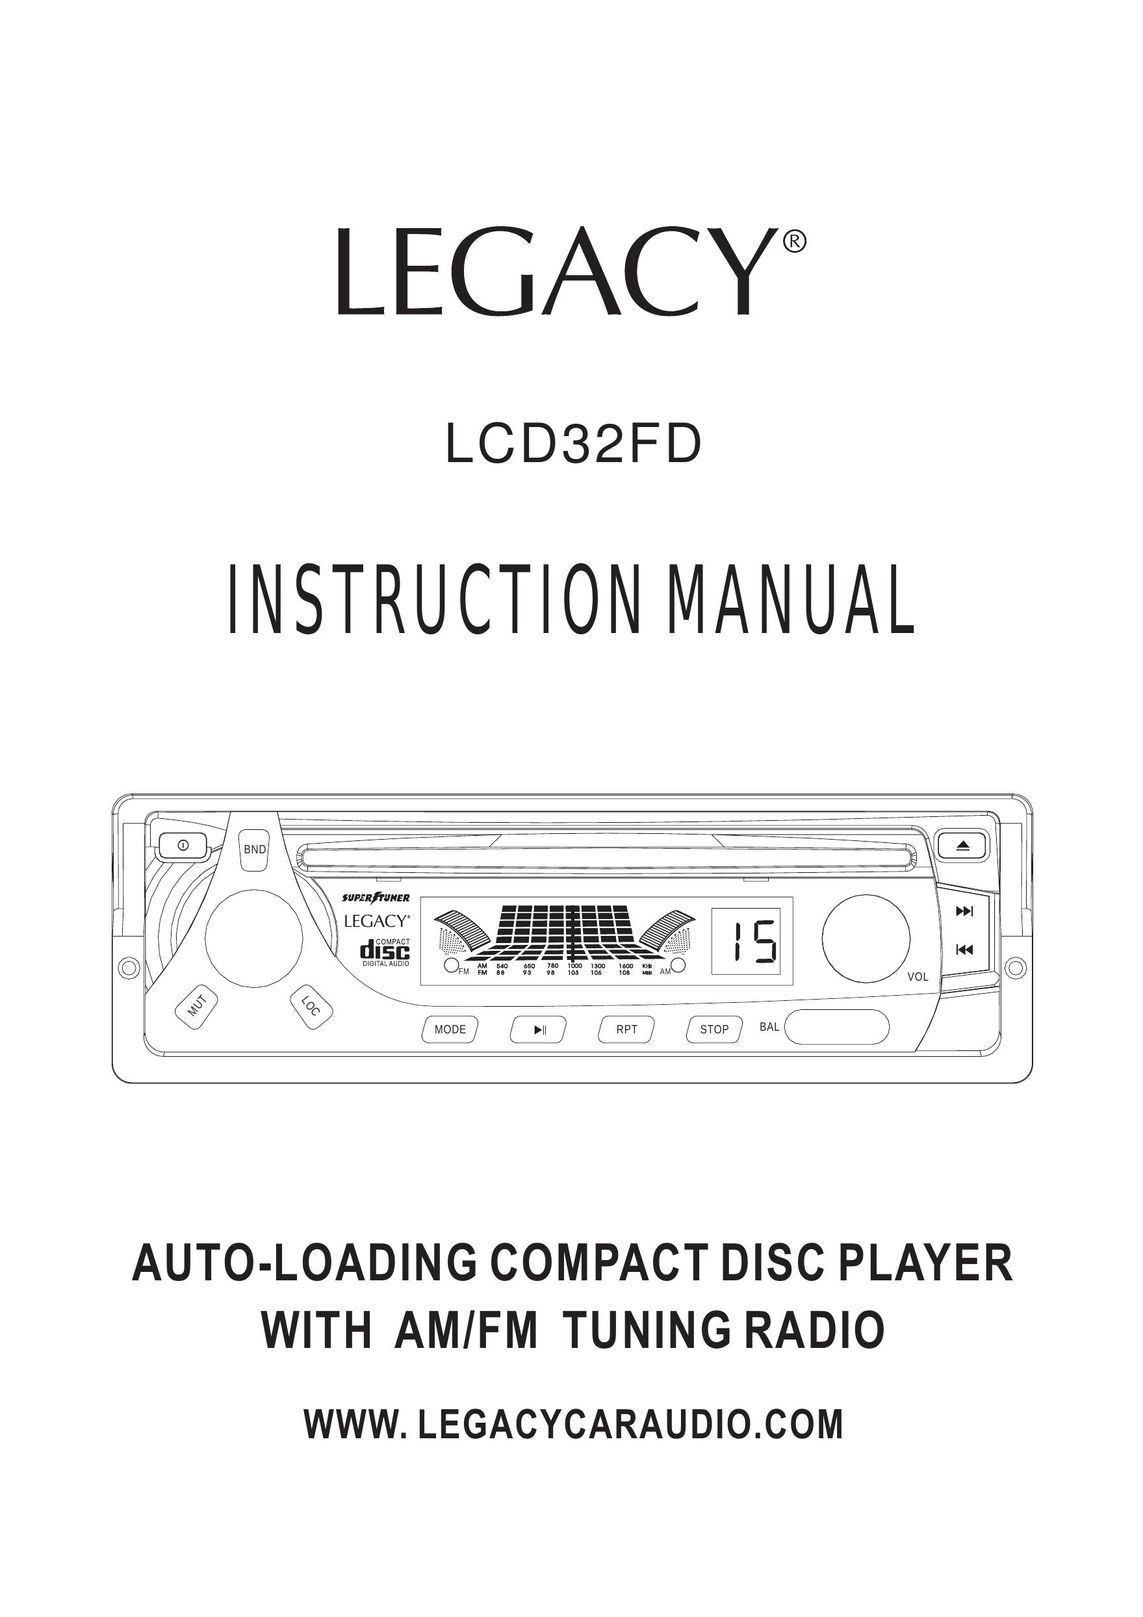 Legacy Car Audio LCD32FD CD Player User Manual